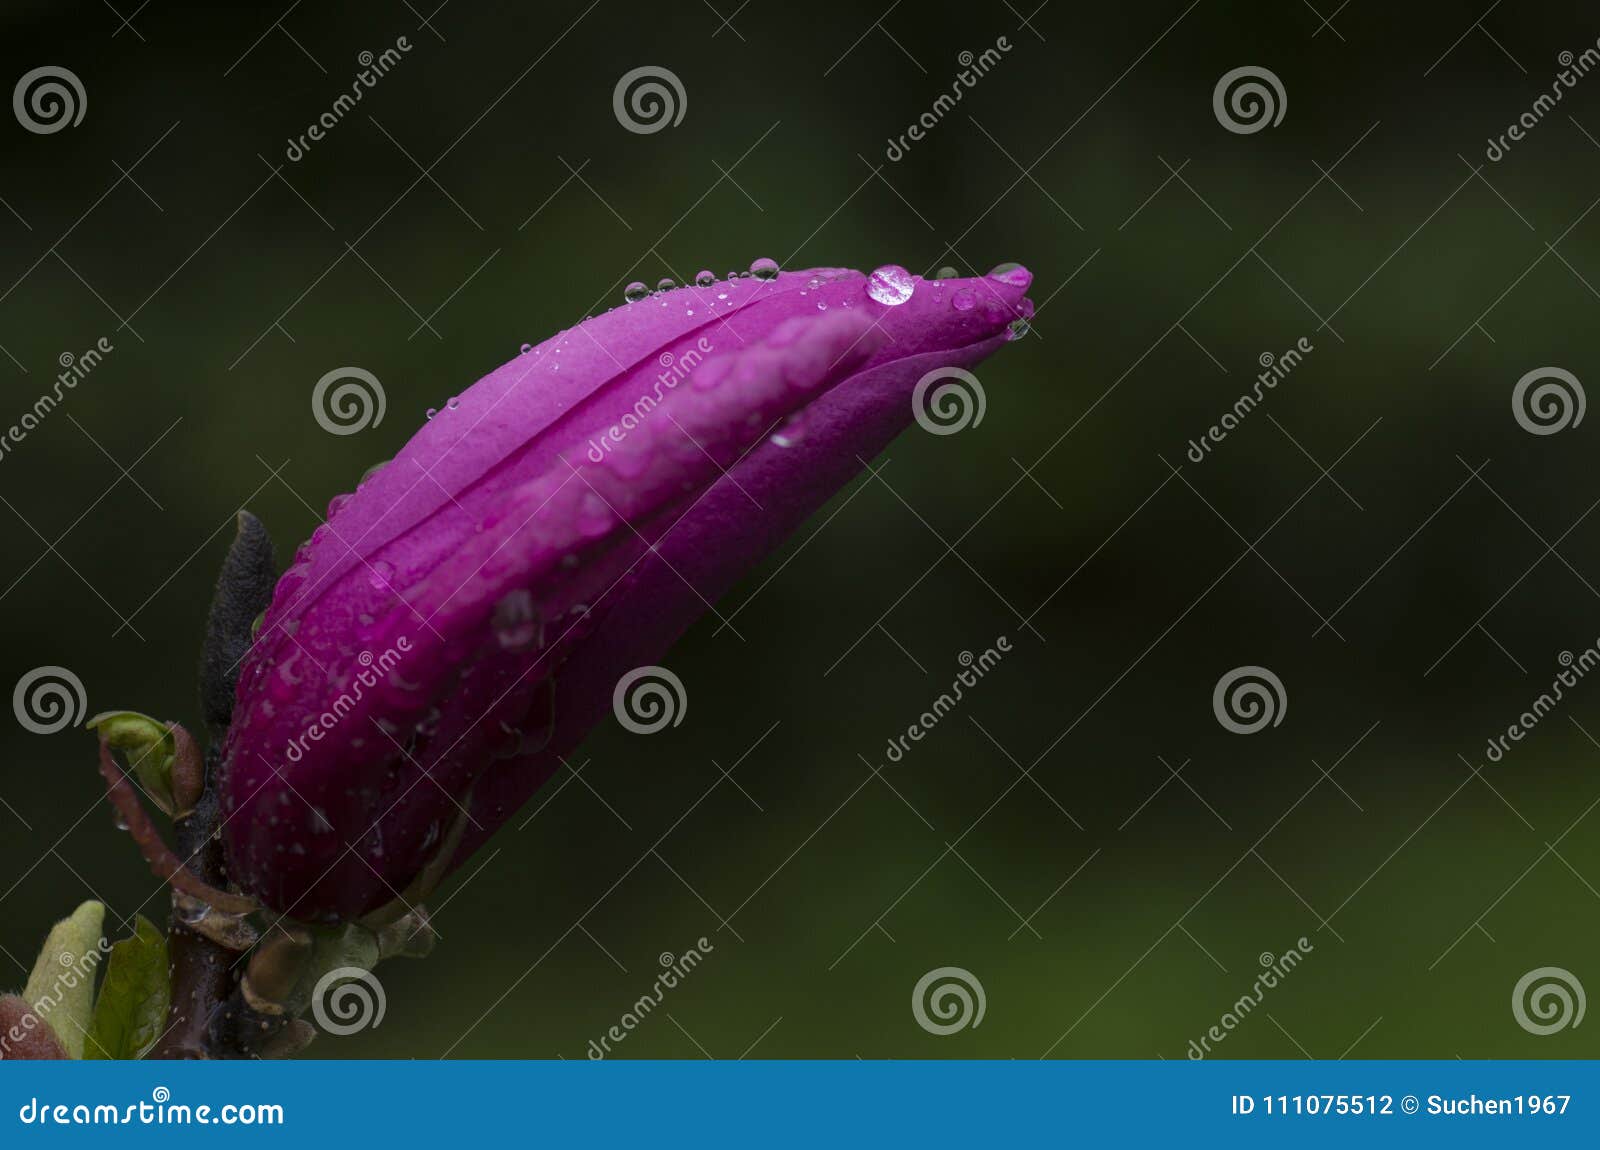 magnolia liliiflora bulb with rain droplets